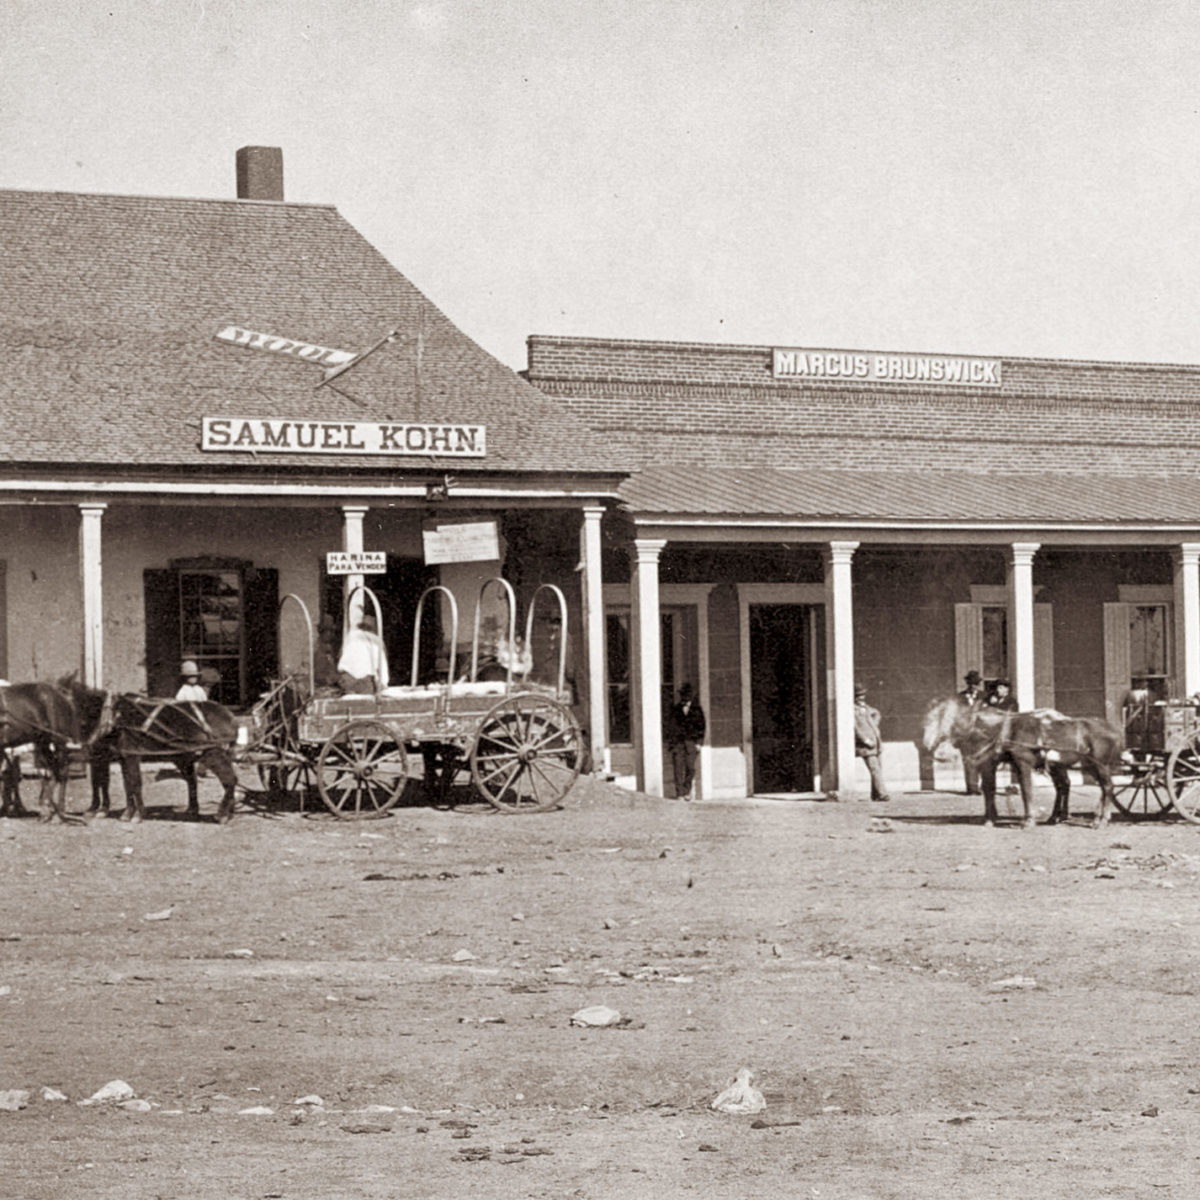 Kohn family store, New Mexico Territory